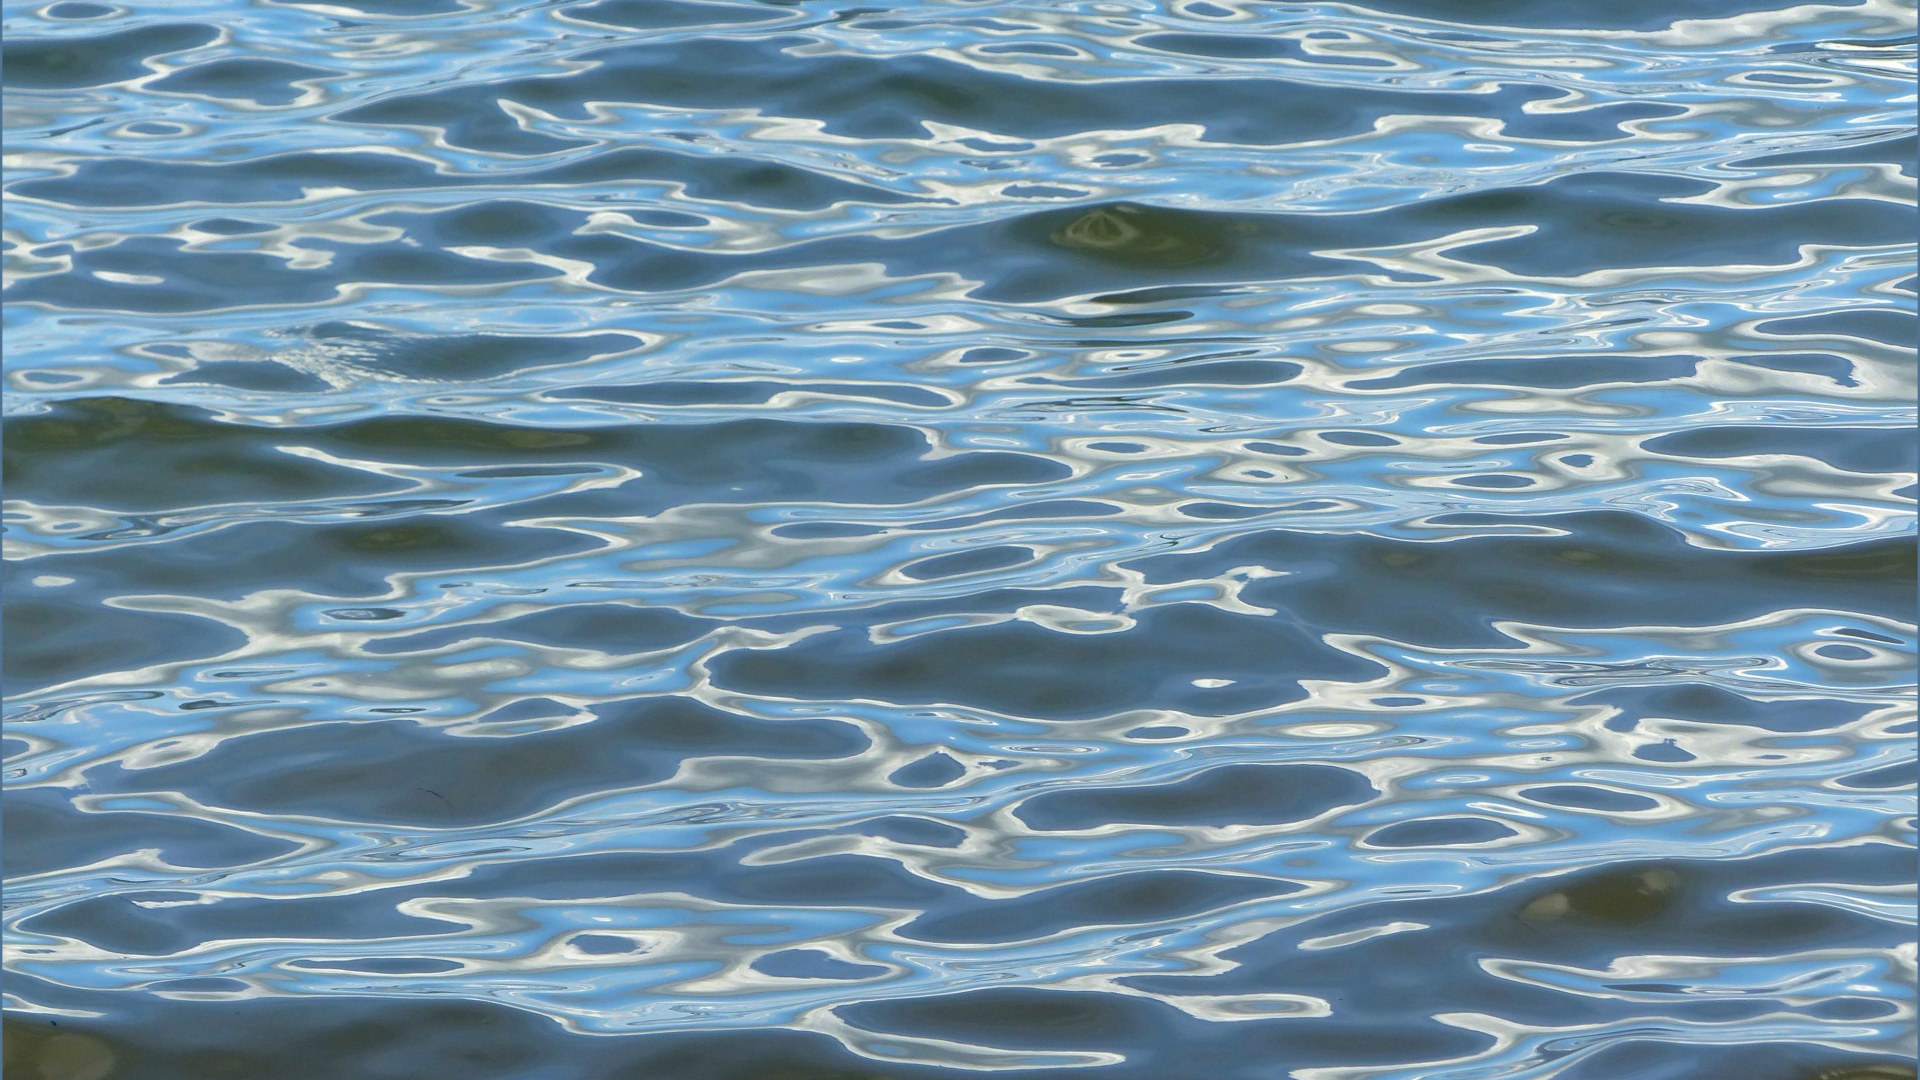 Patterns on sea water at Studland Bay